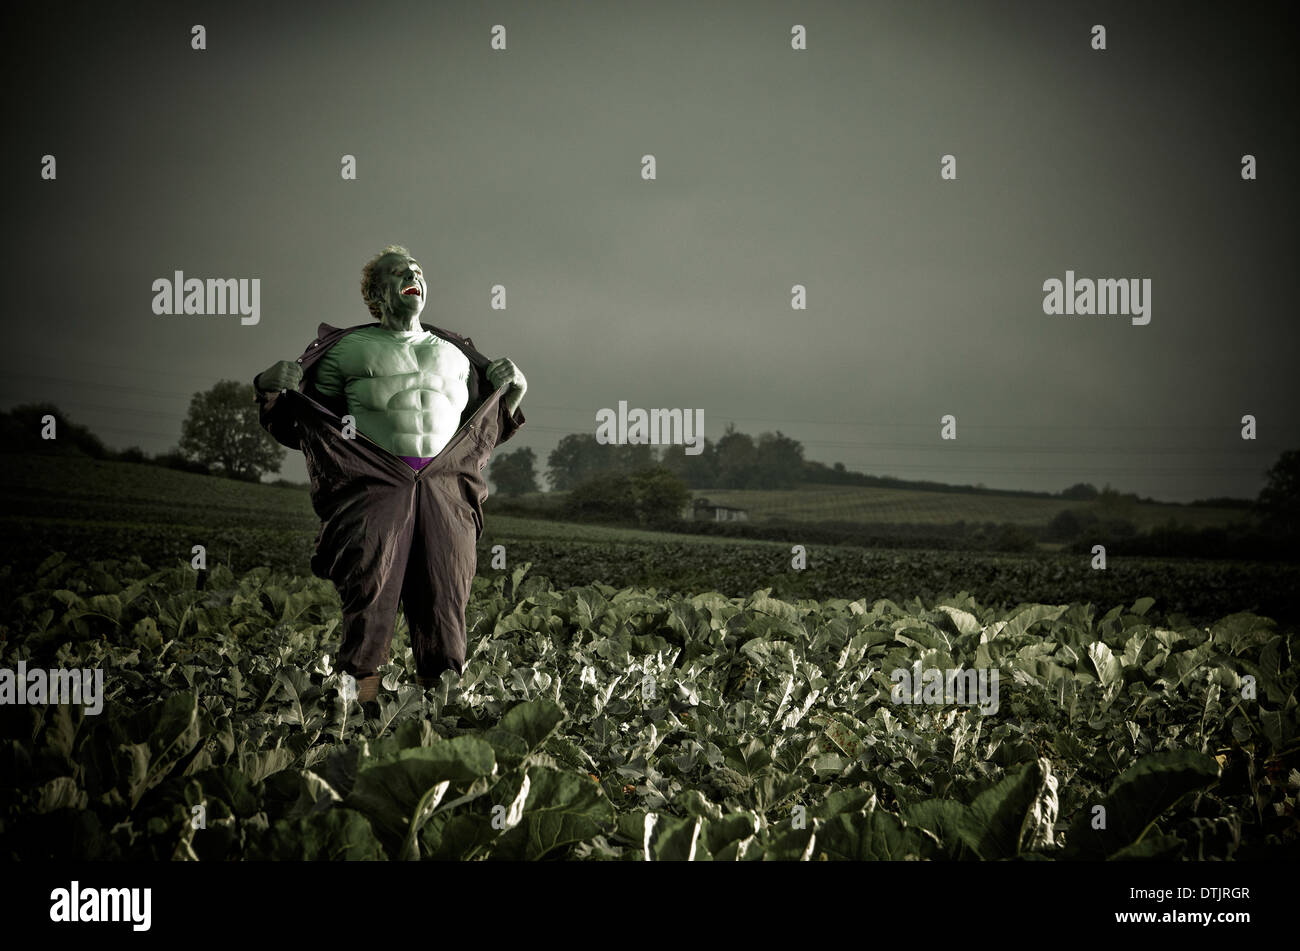 SUPERHERO COSTUME MAN STANDING IN A FIELD Stock Photo